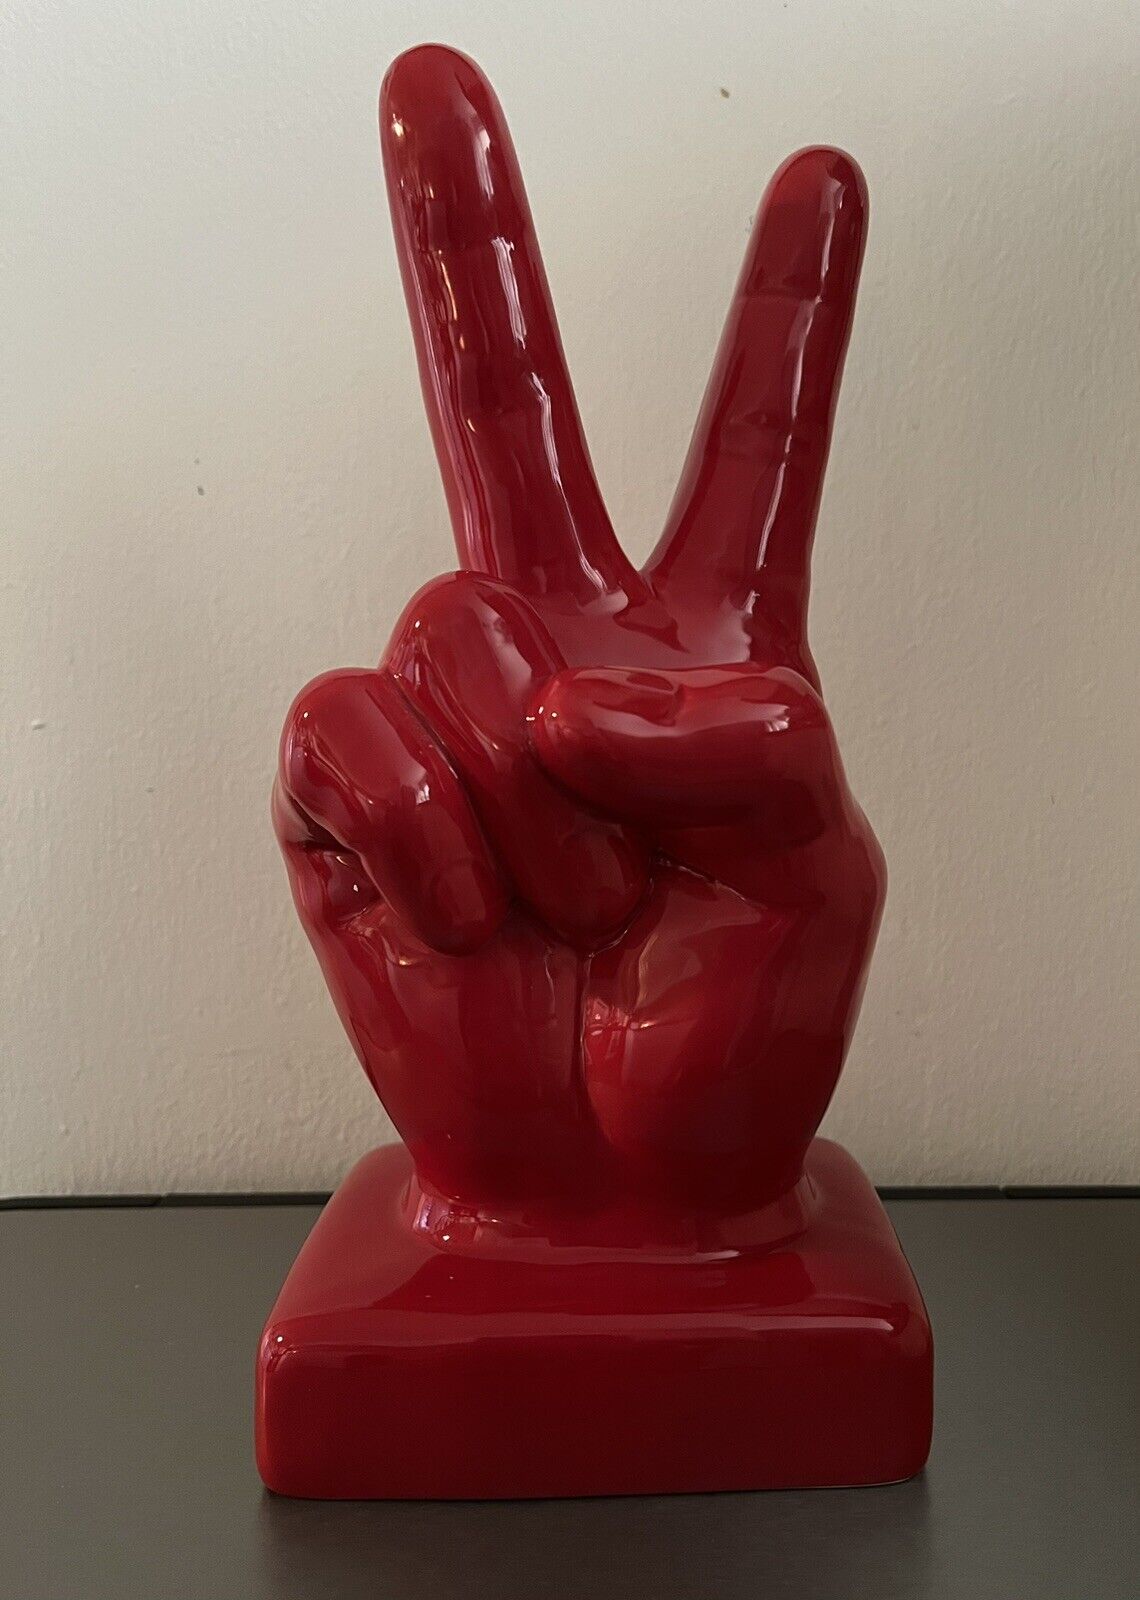 Ceramic Red Peace Sign Hand Statue Figurine Decor #70-1214RD